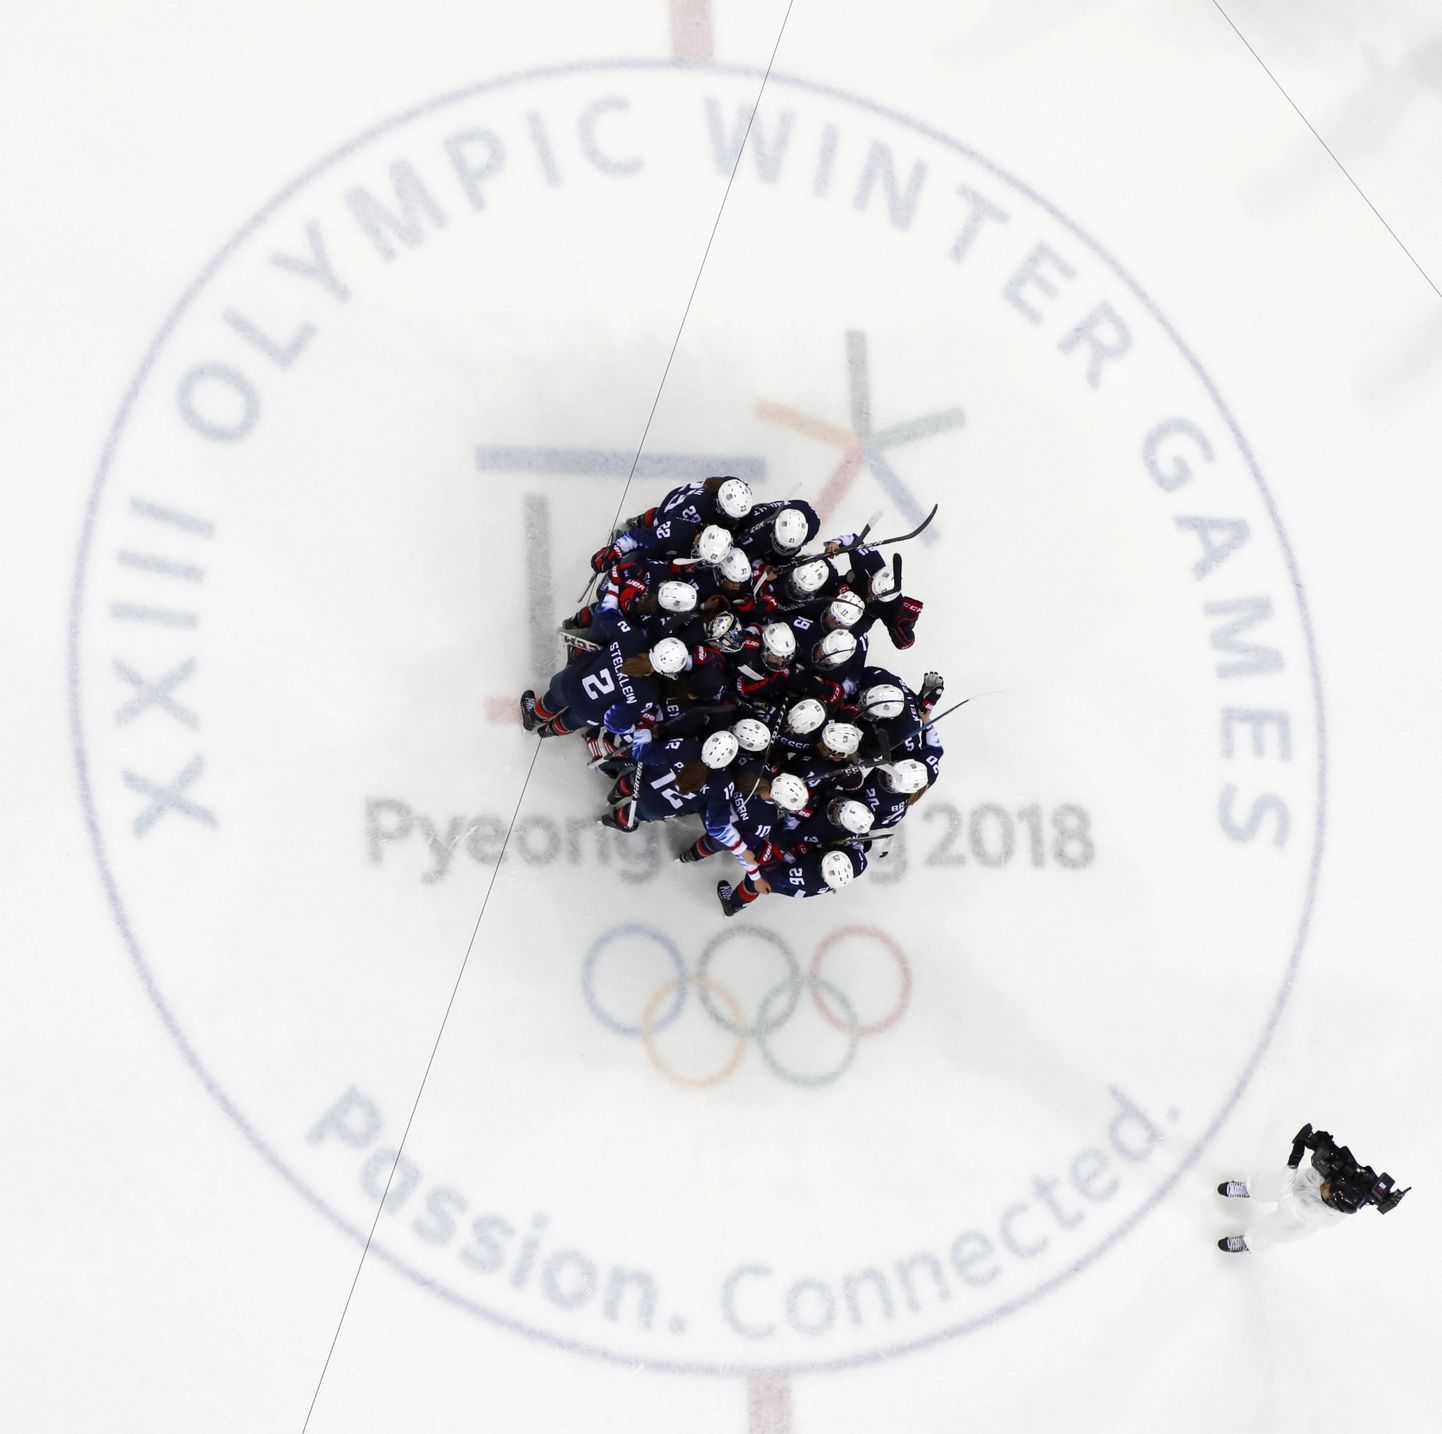 USA jäähokinaiskond Pyeongchangi mängudel.